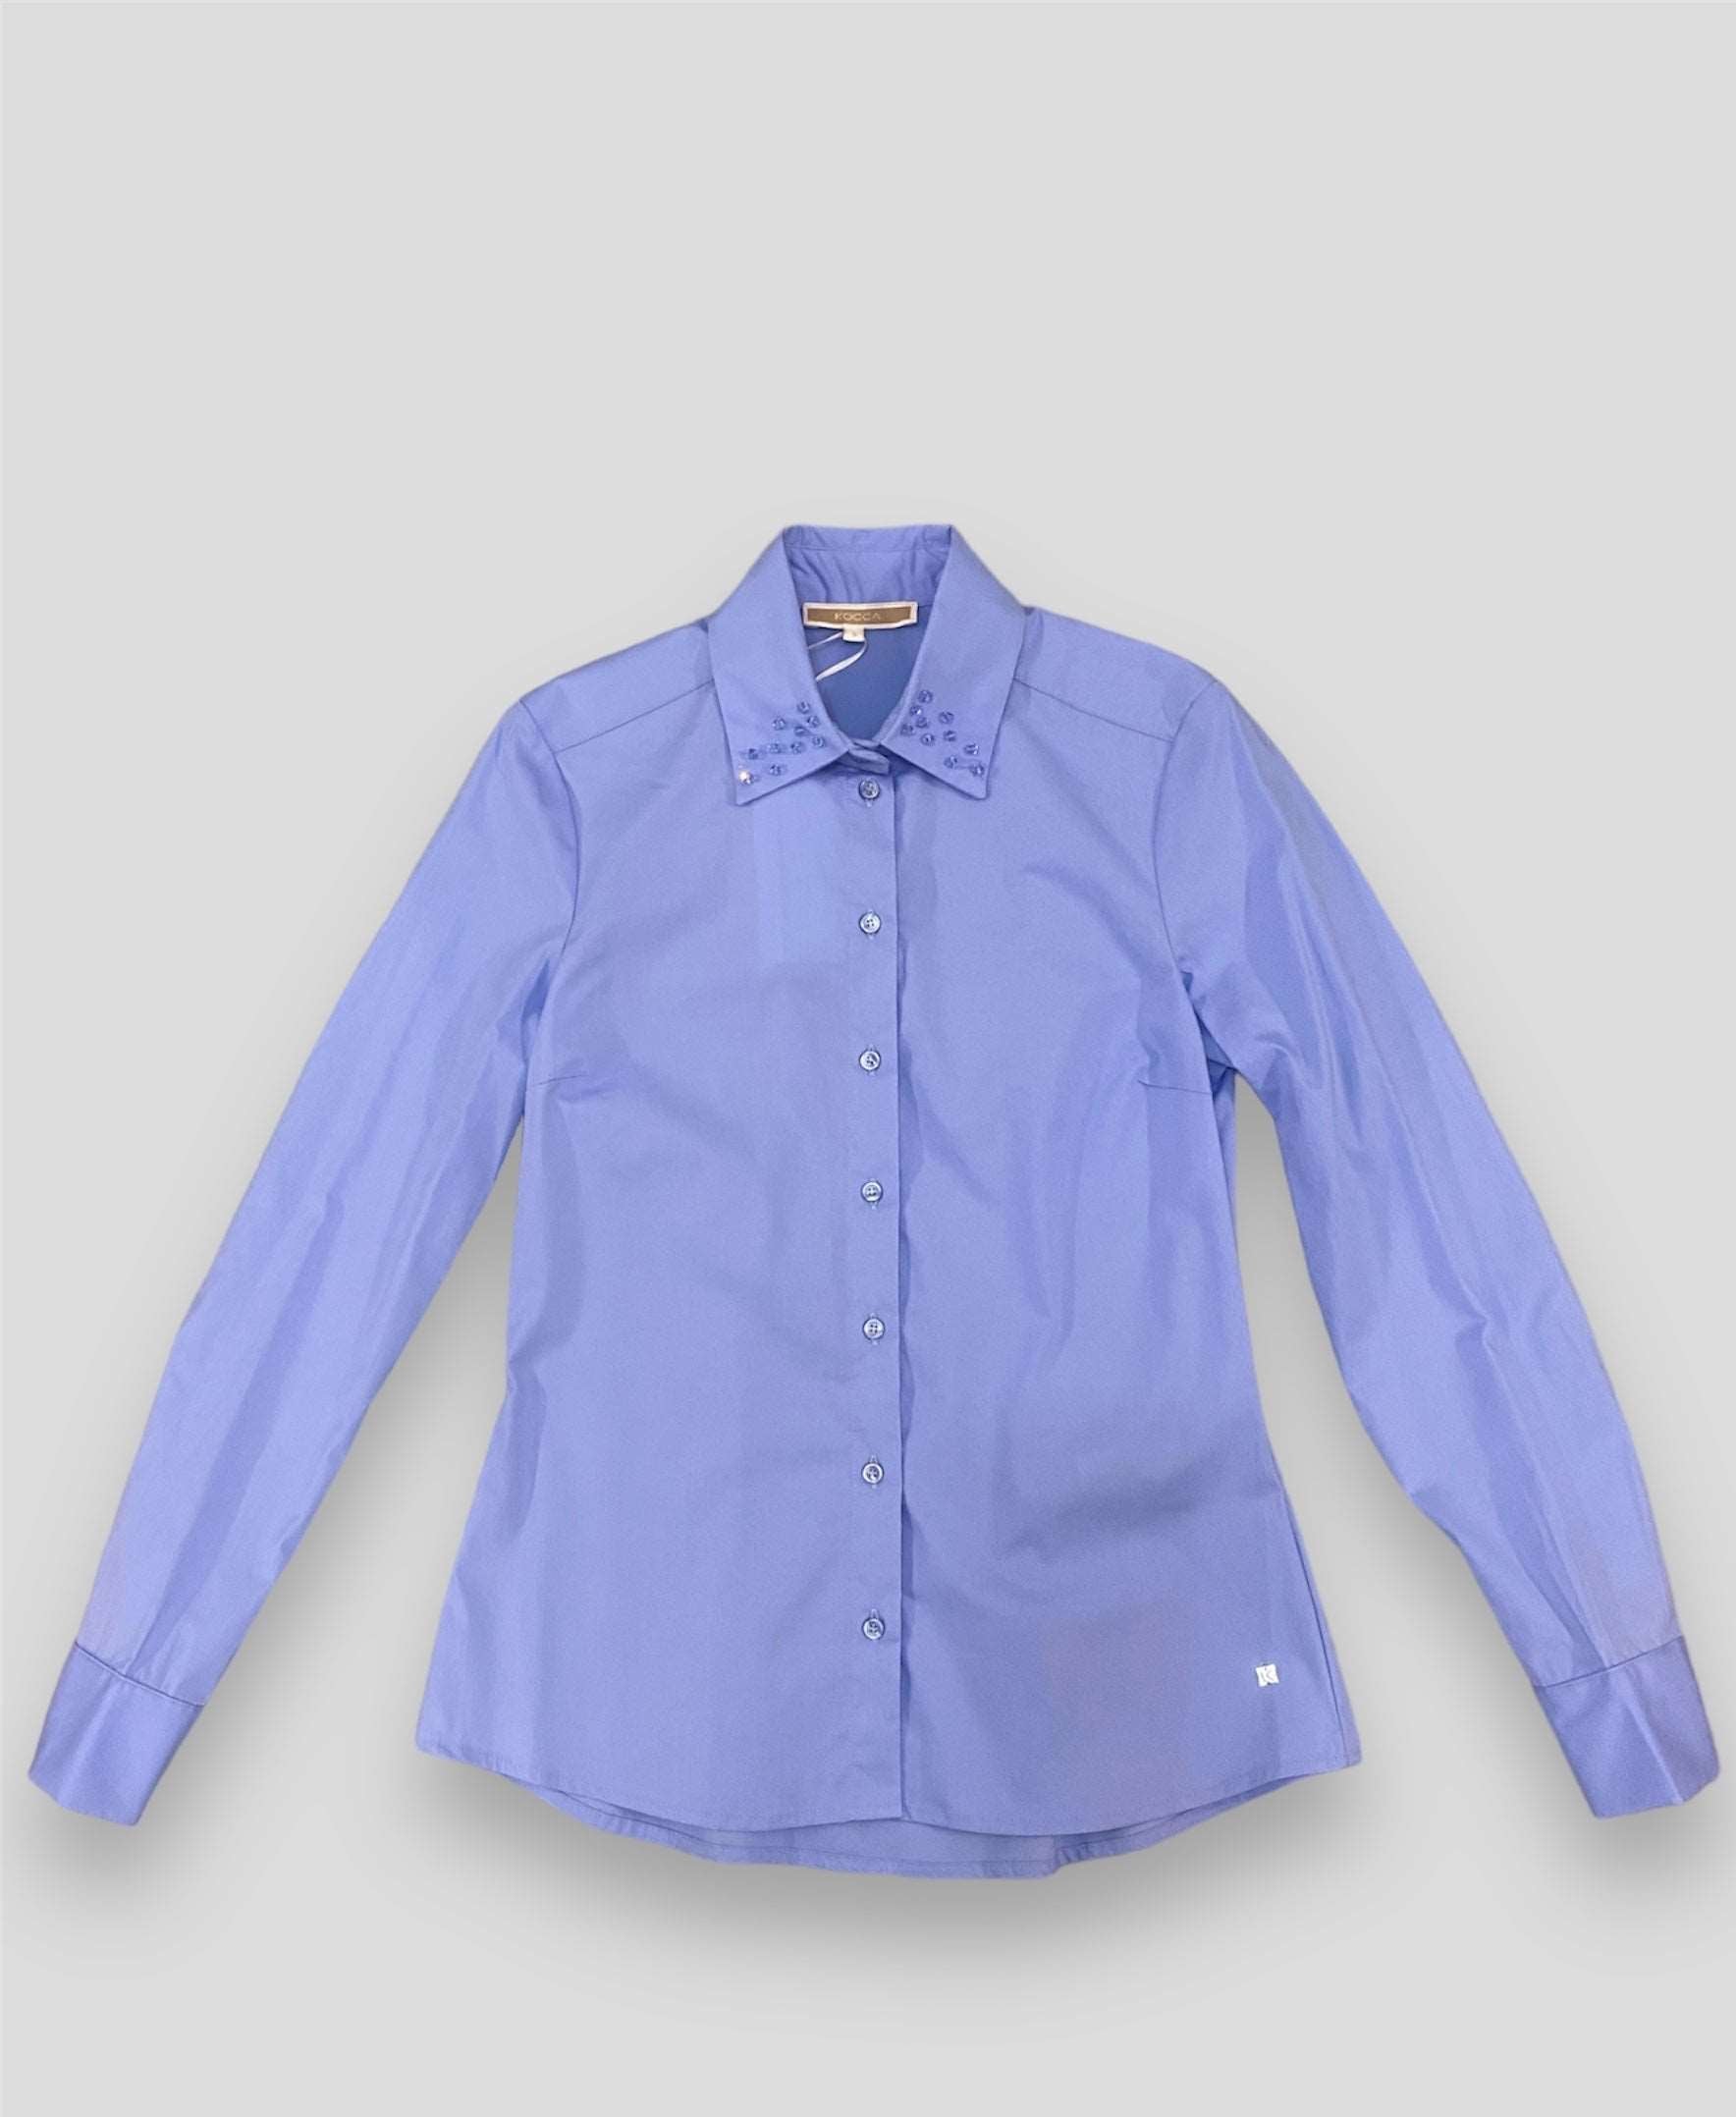 Kocca camicia azzurra - Premium CAMICIE from KOCCA - Just €100! Shop now at Amaltea